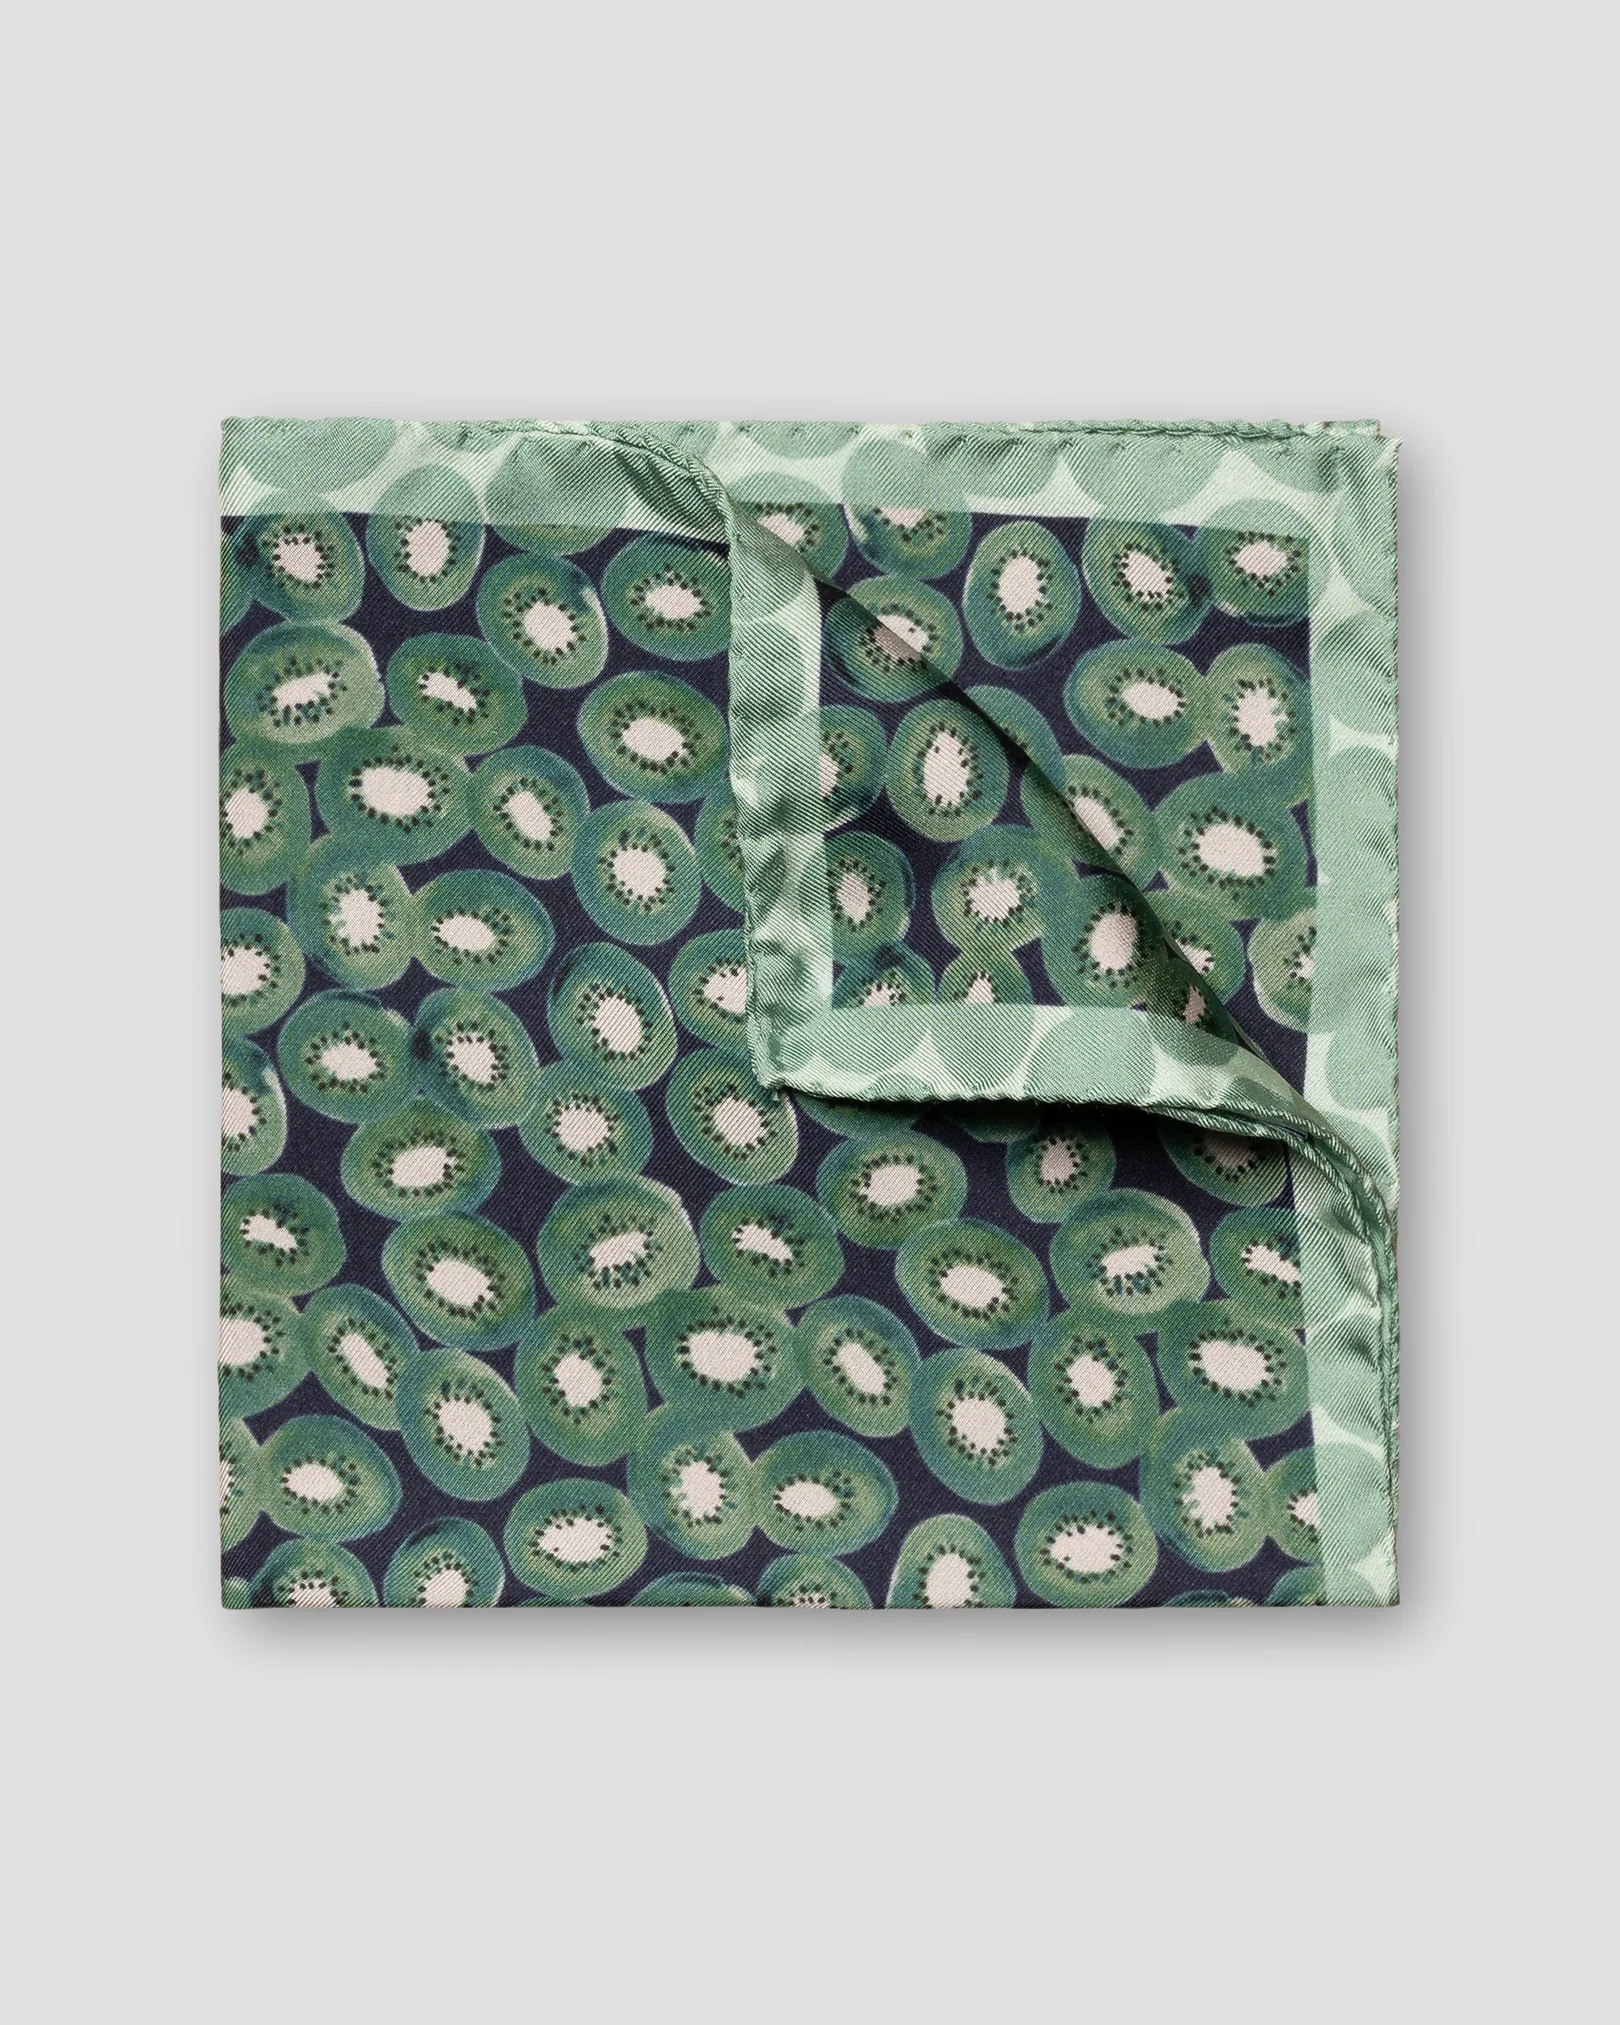 Eton - Dark Green Kiwi Print Silk Pocket Square